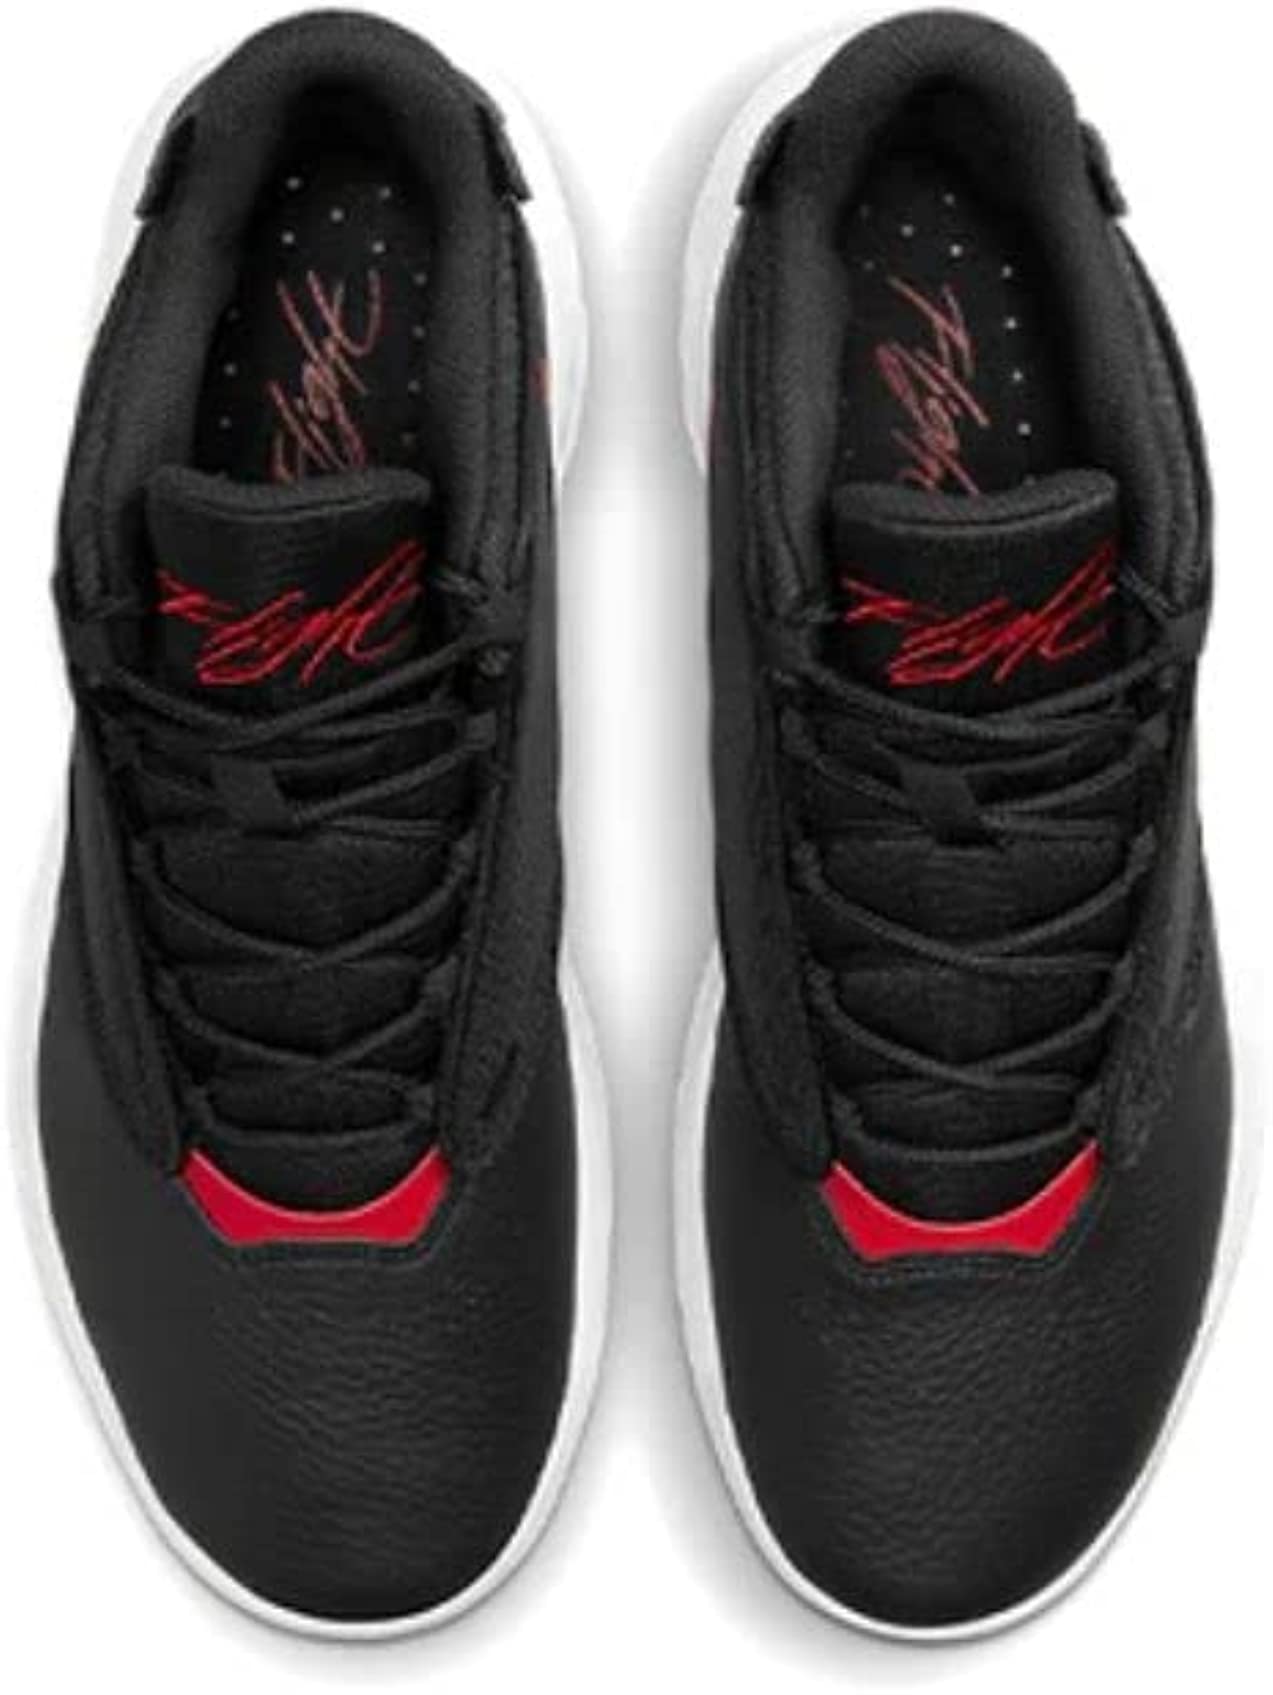 Jordan Mens Max Aura 4 Shoes,Black/University Red/White